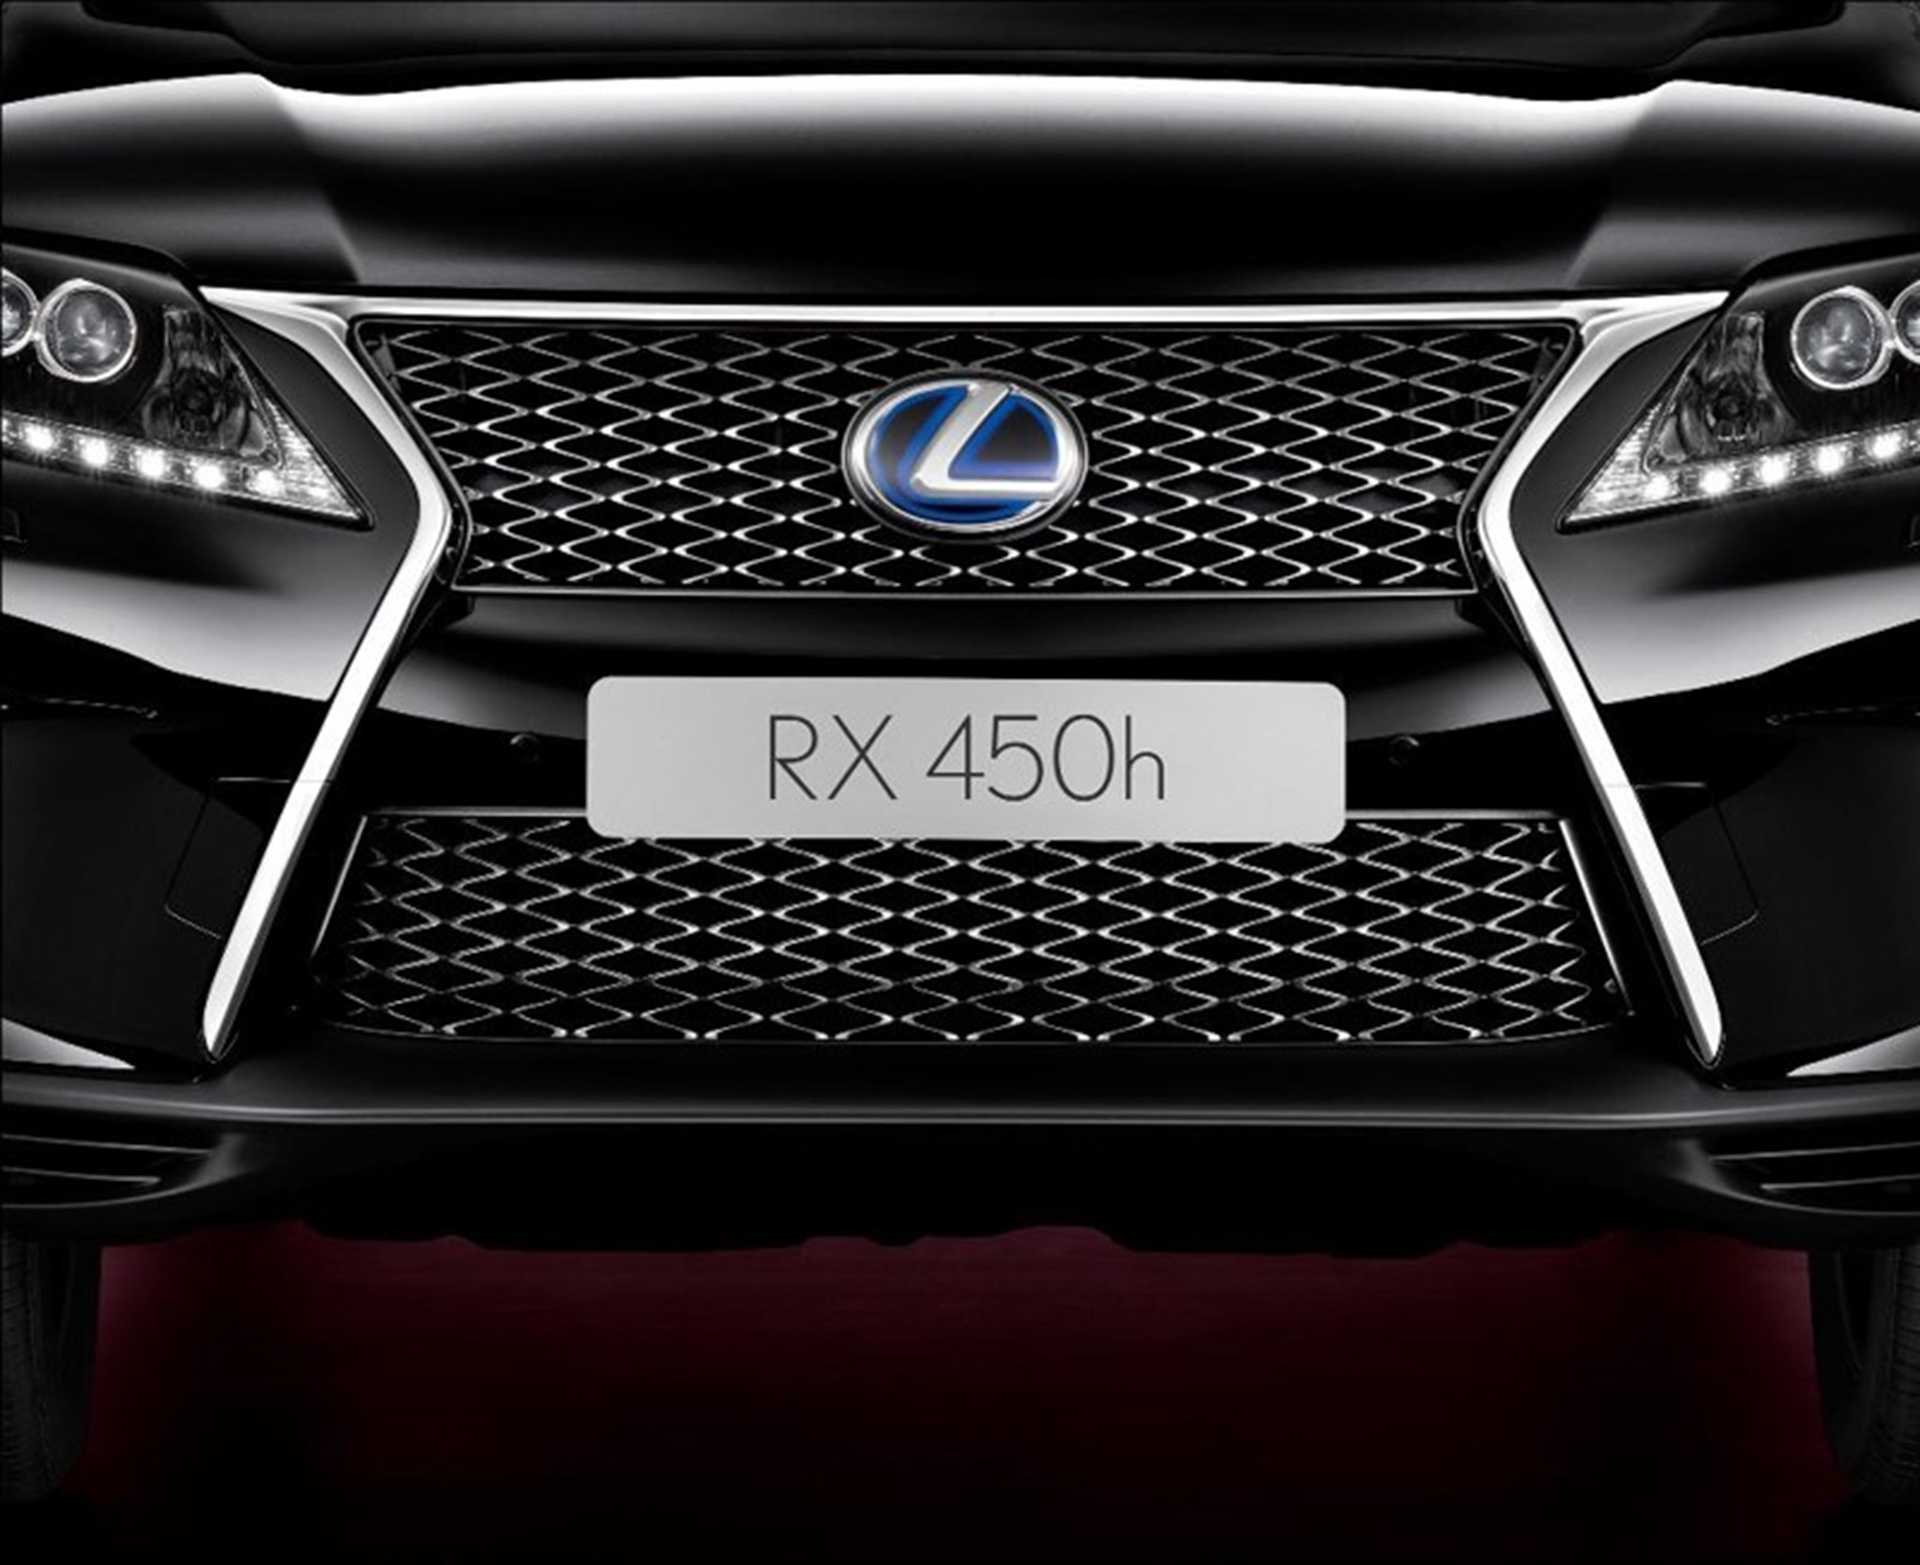 Geneva Motor Show: New Lexus Rx 450h to Debut